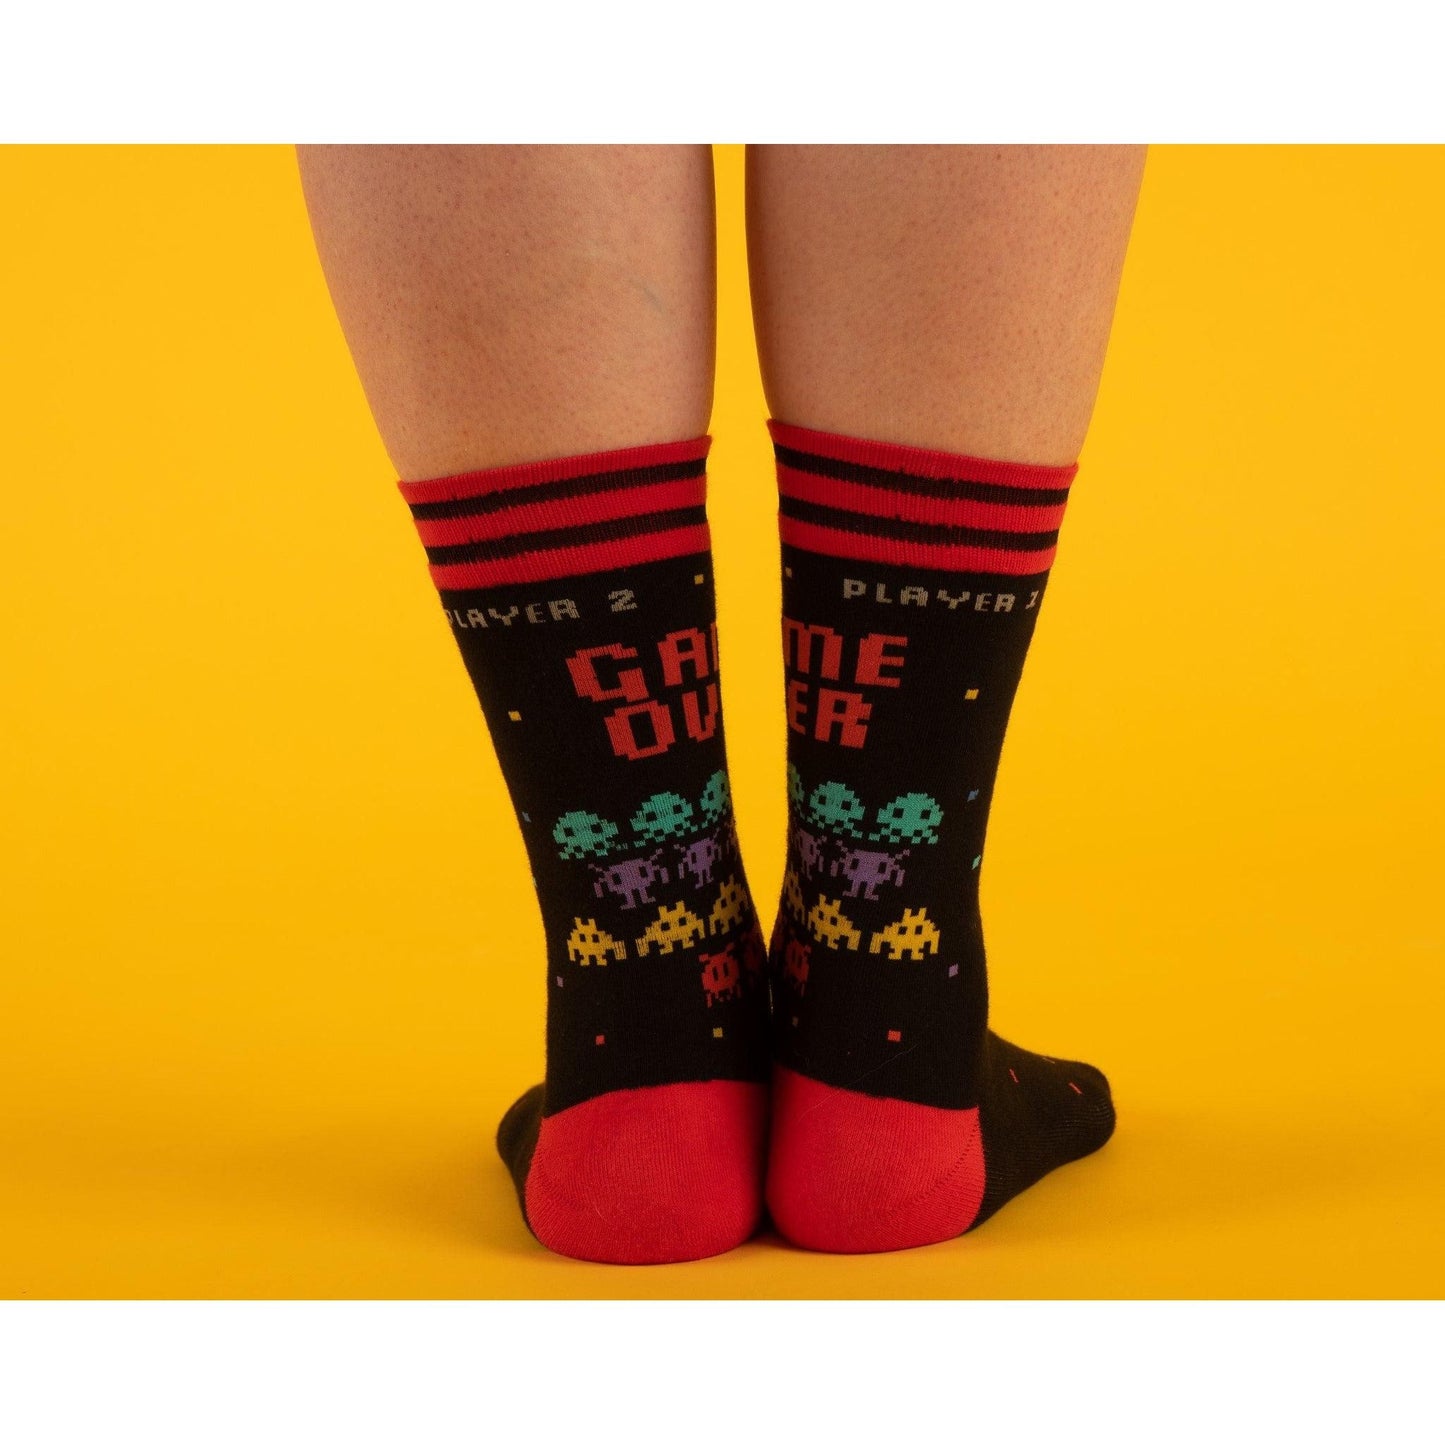 Game Over 80s Video Game Crew Socks | Colorful Vintage Games Design Socks